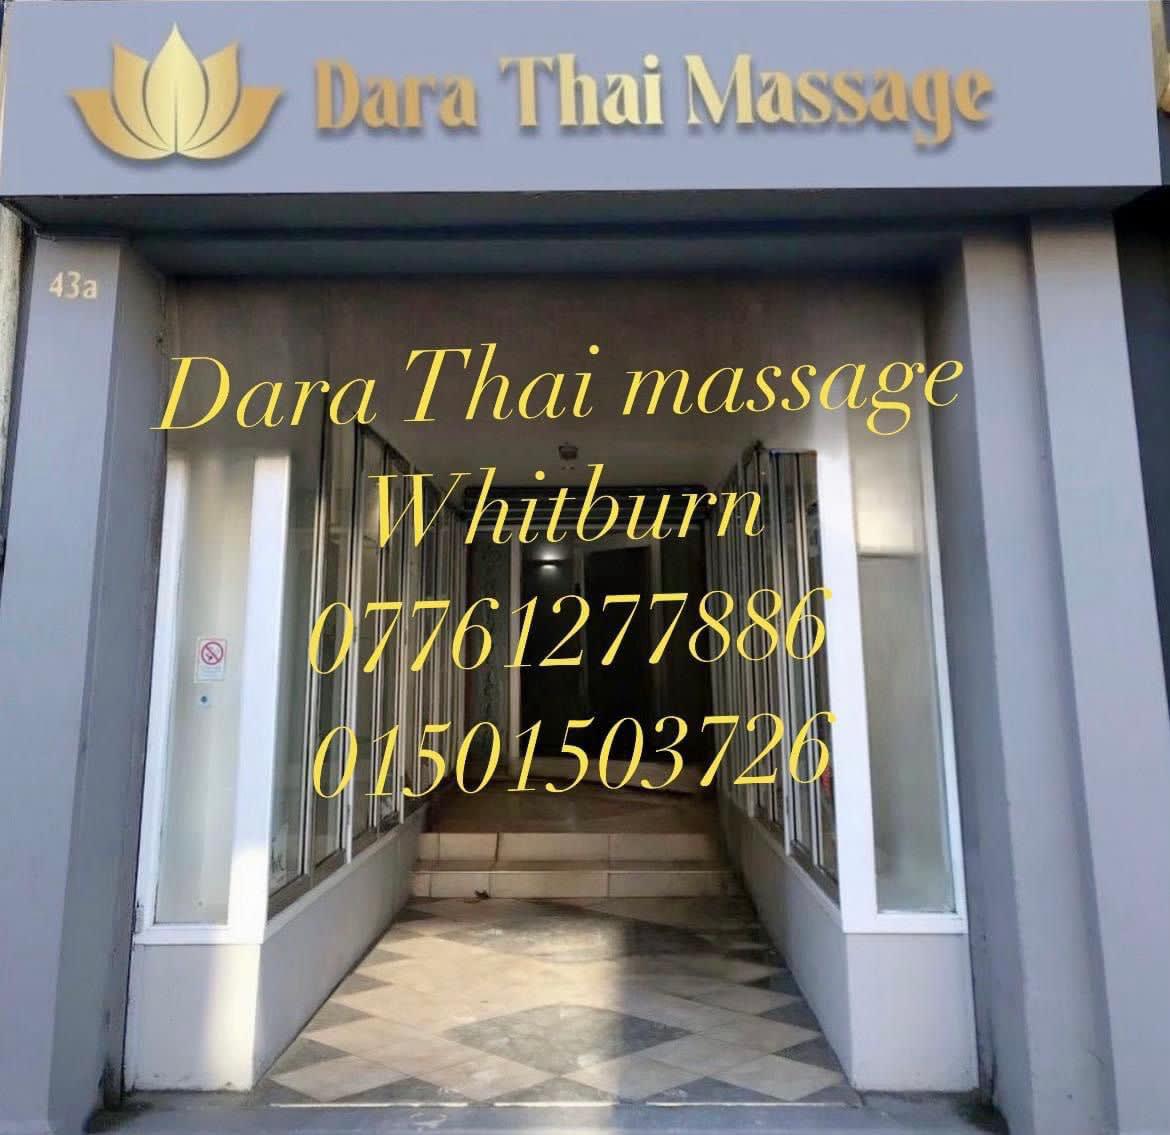 Dara Thai Massage Bathgate 07761 277886